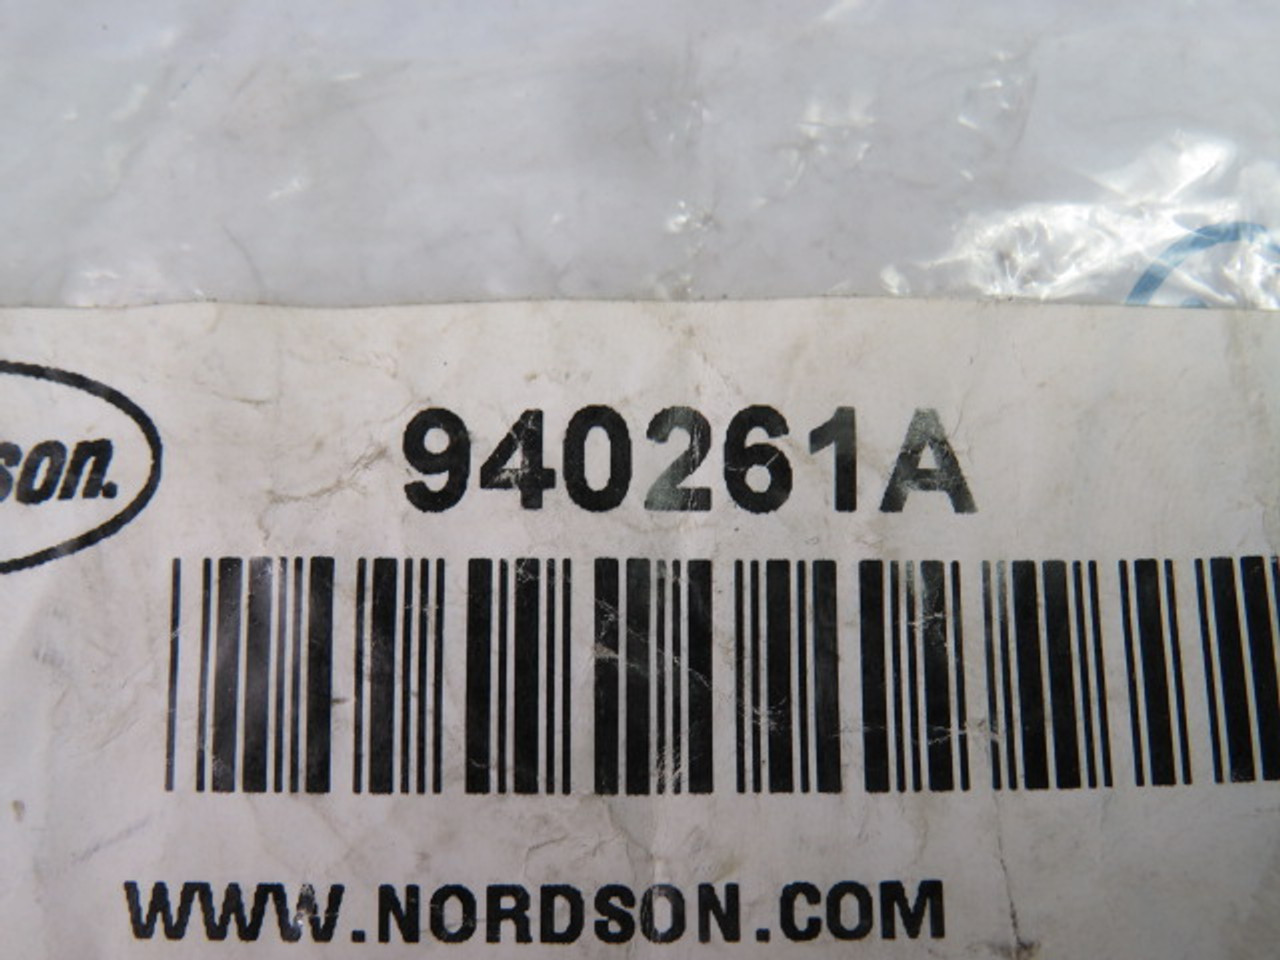 Nordson 940261A Viton O-Ring 1.250x1.375x0.63" ! NWB !